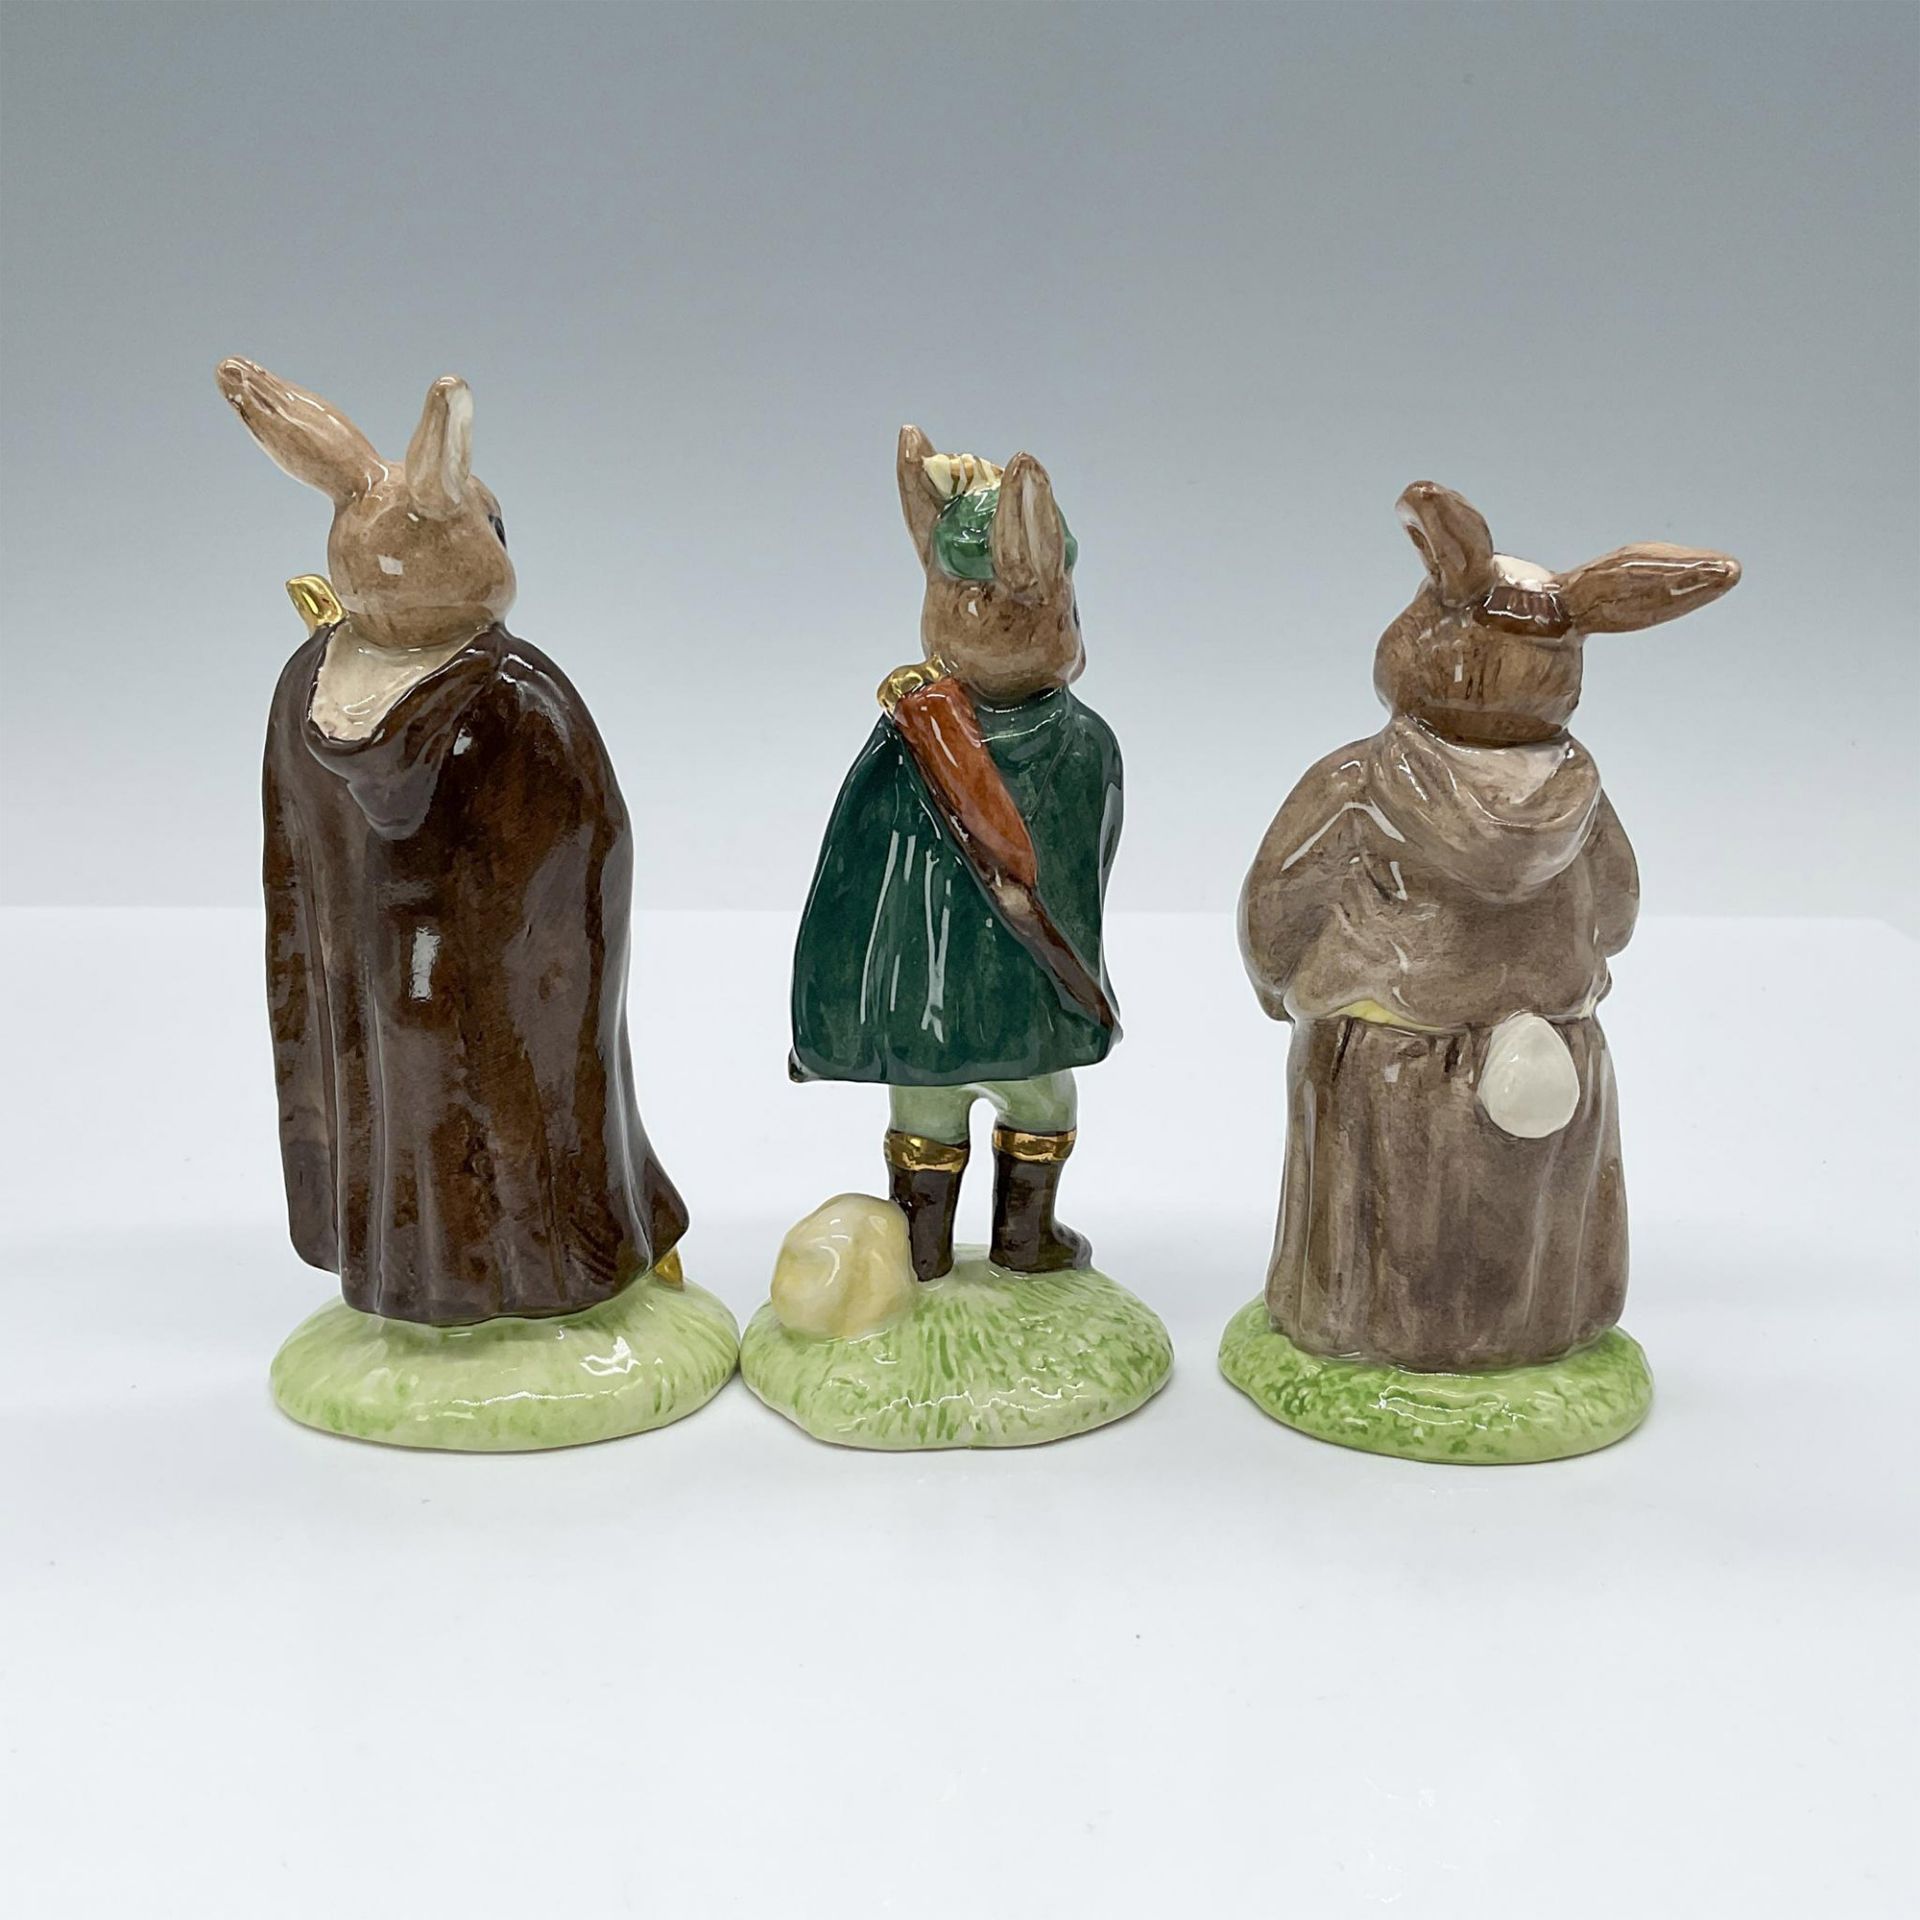 3pc Royal Doulton Bunnykins Robin Hood Gold Ed. Figurines - Image 2 of 3